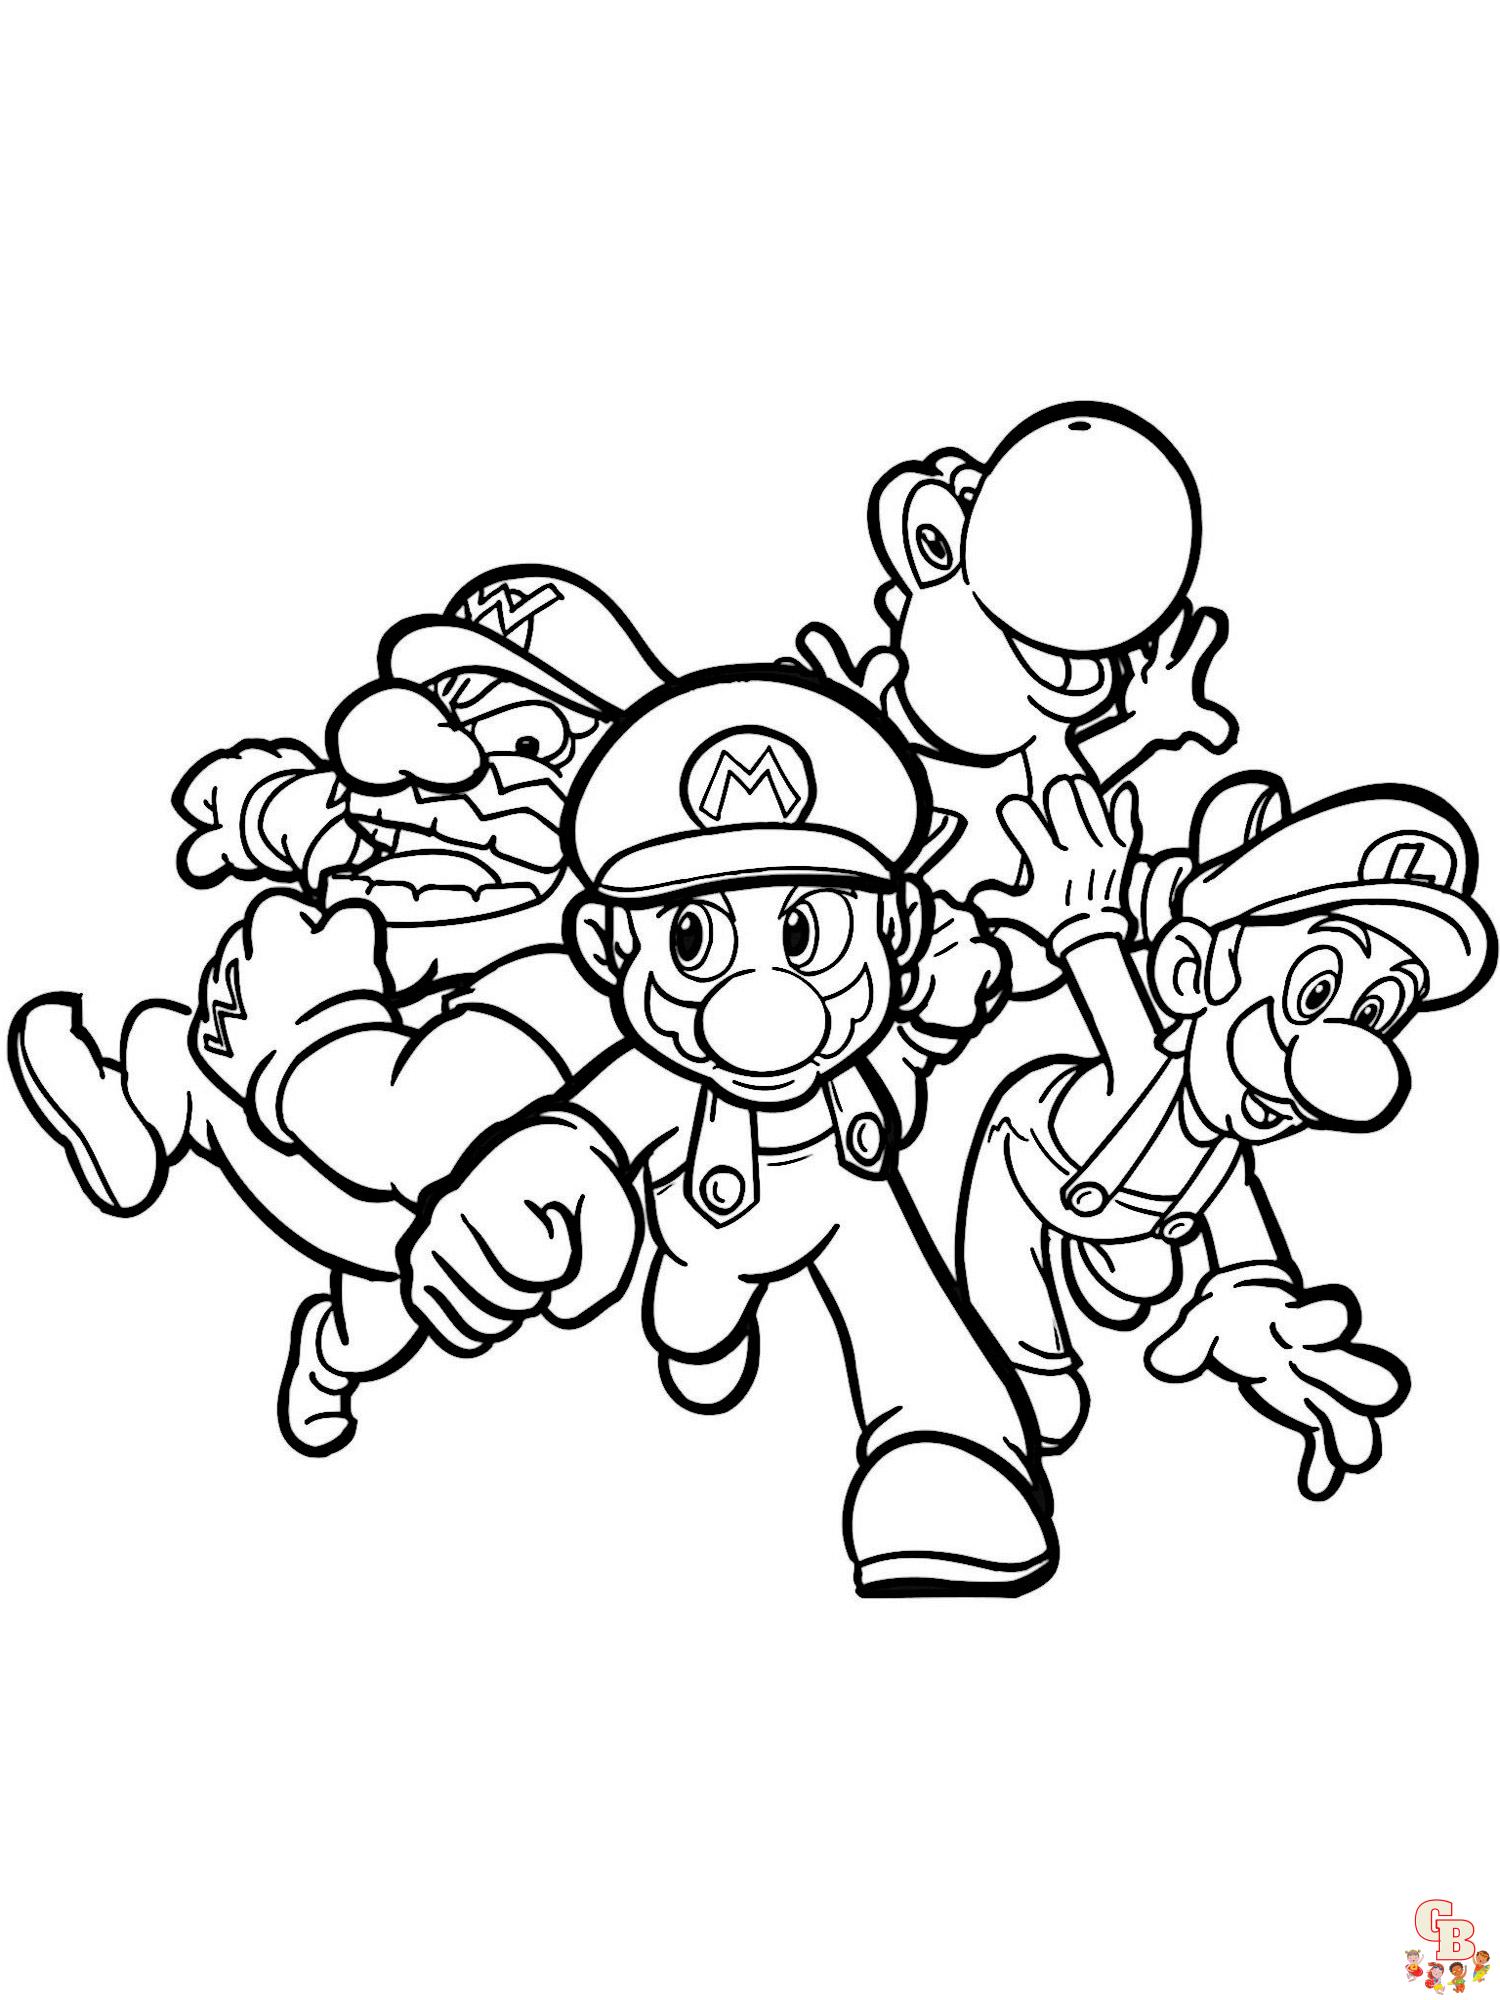 Super Mario Coloring Pages 3